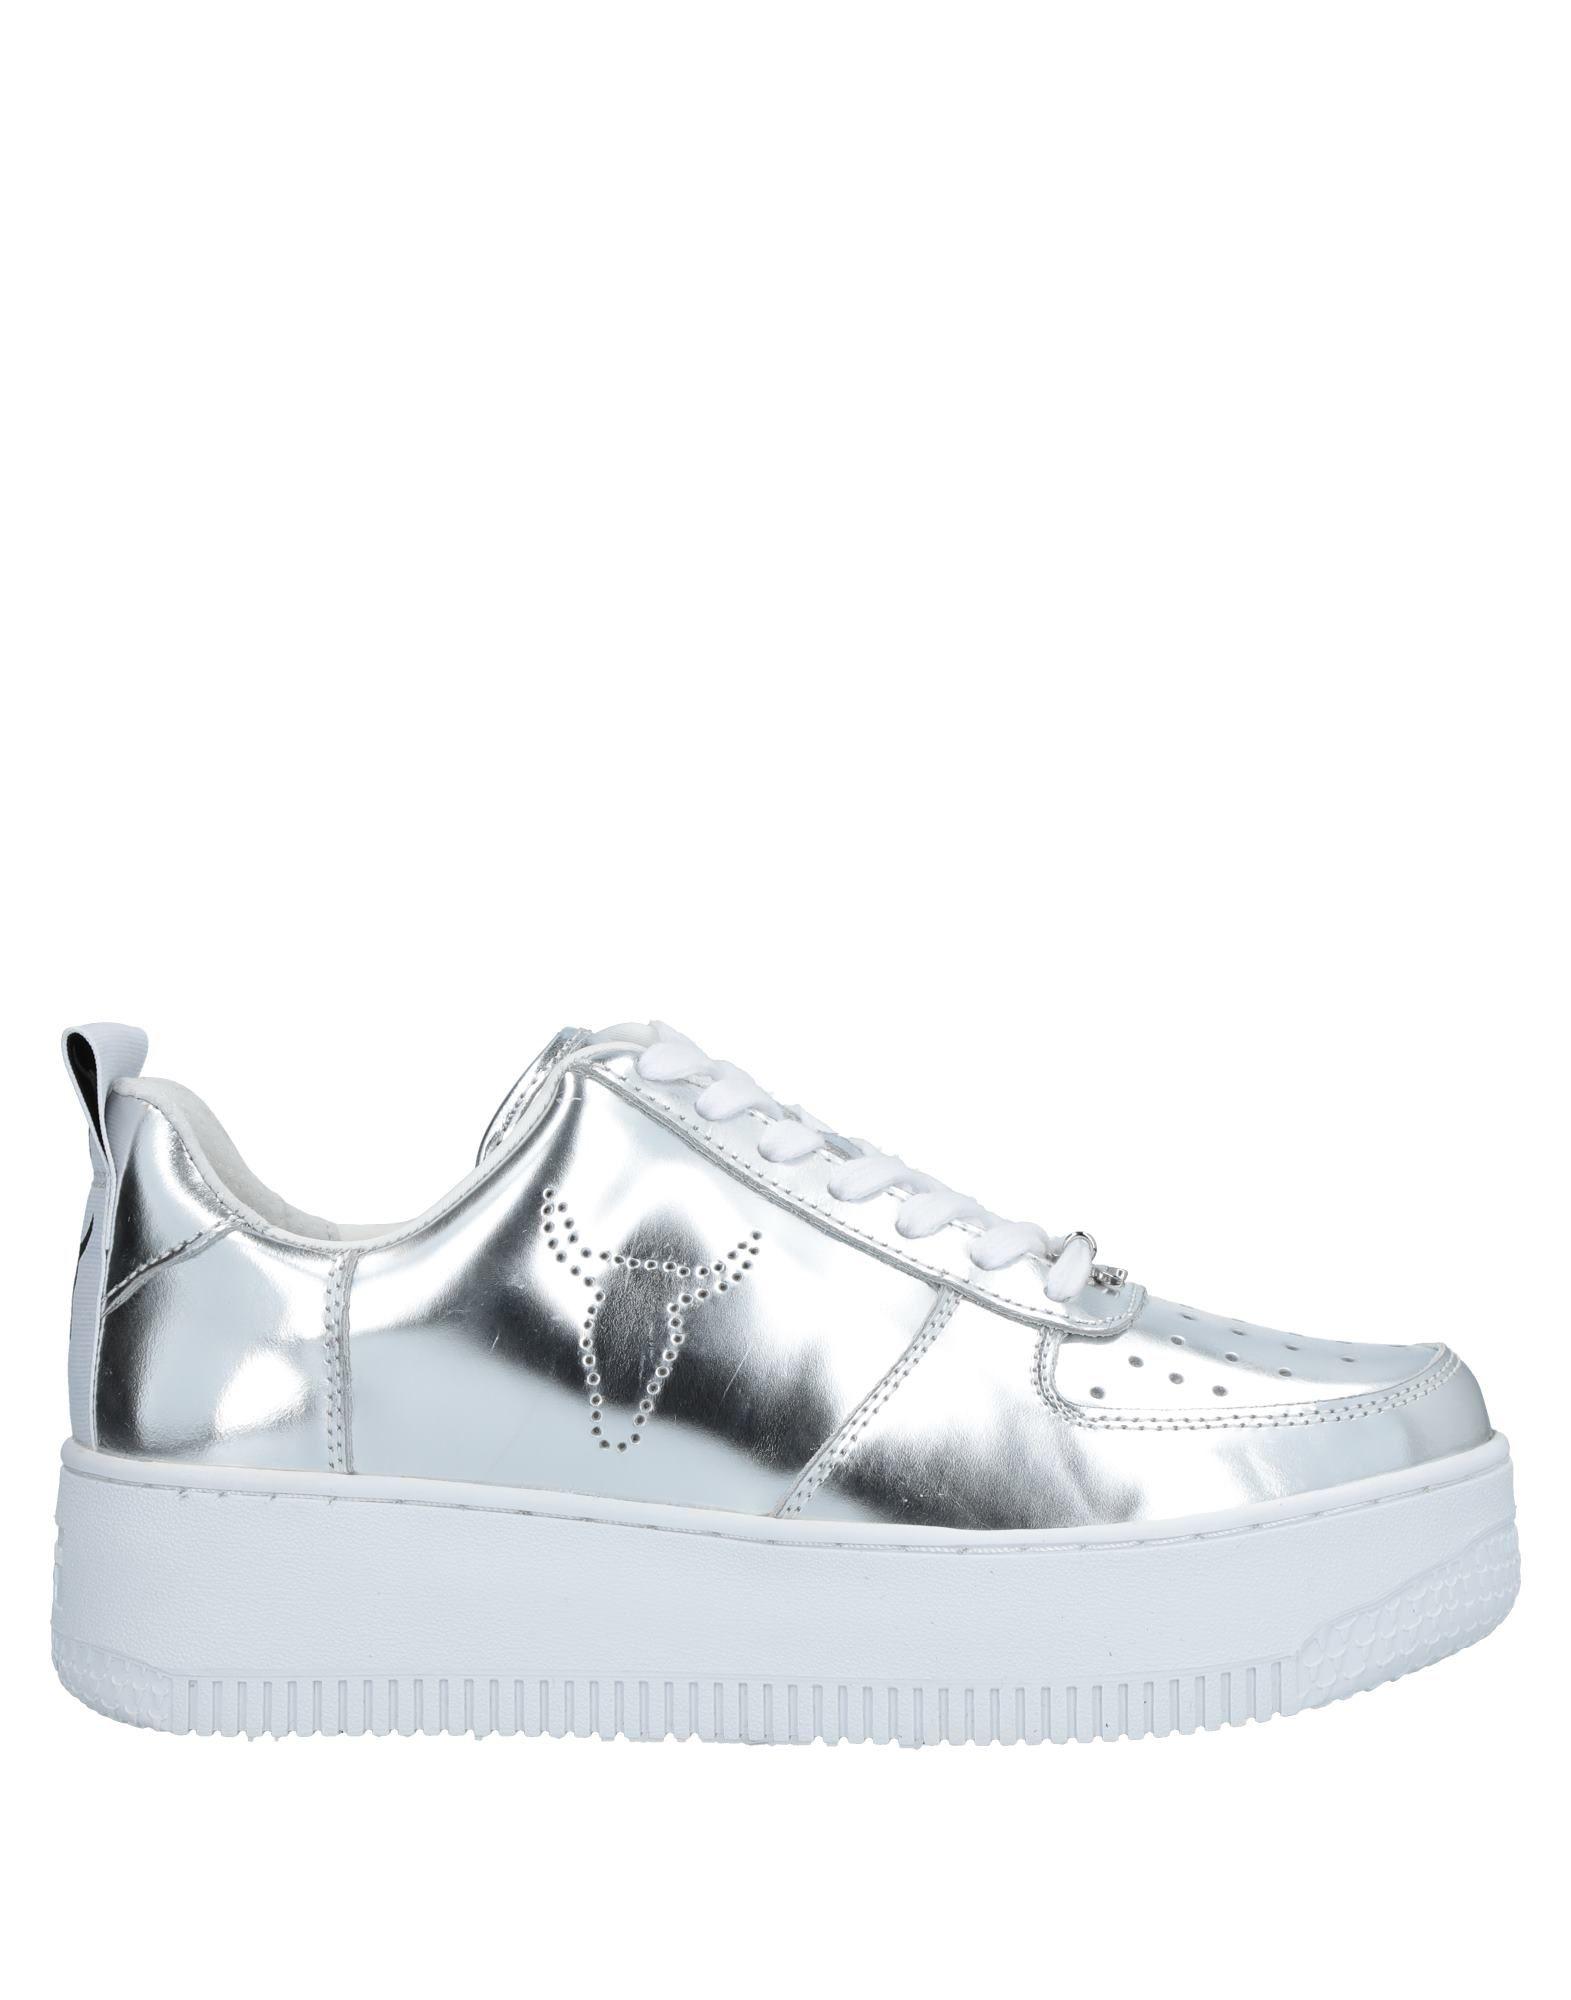 Windsor Smith Low-tops & Sneakers in Silver (Metallic) - Lyst